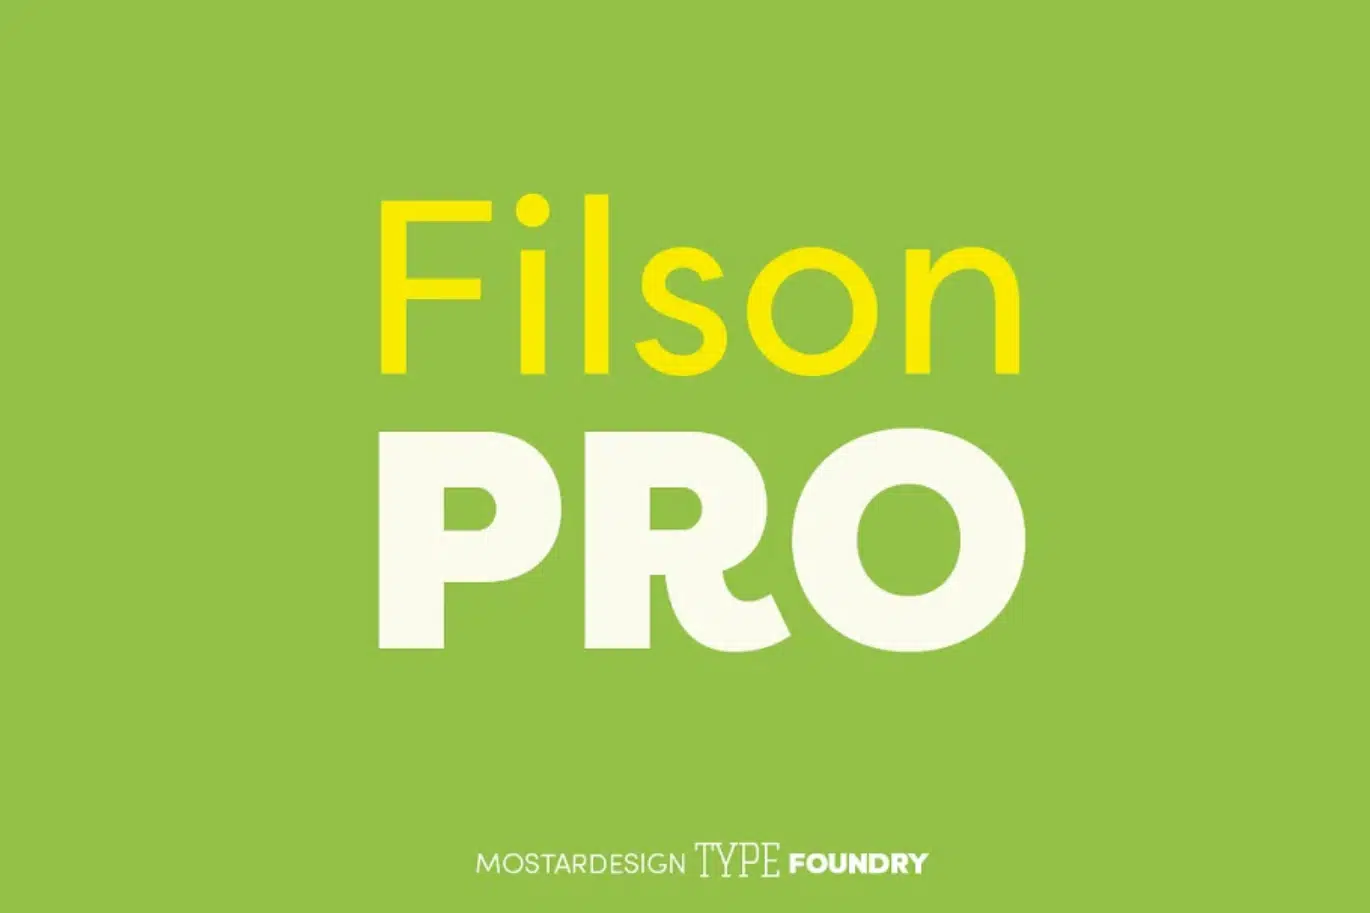 Filson Pro Font Similar To Raleway